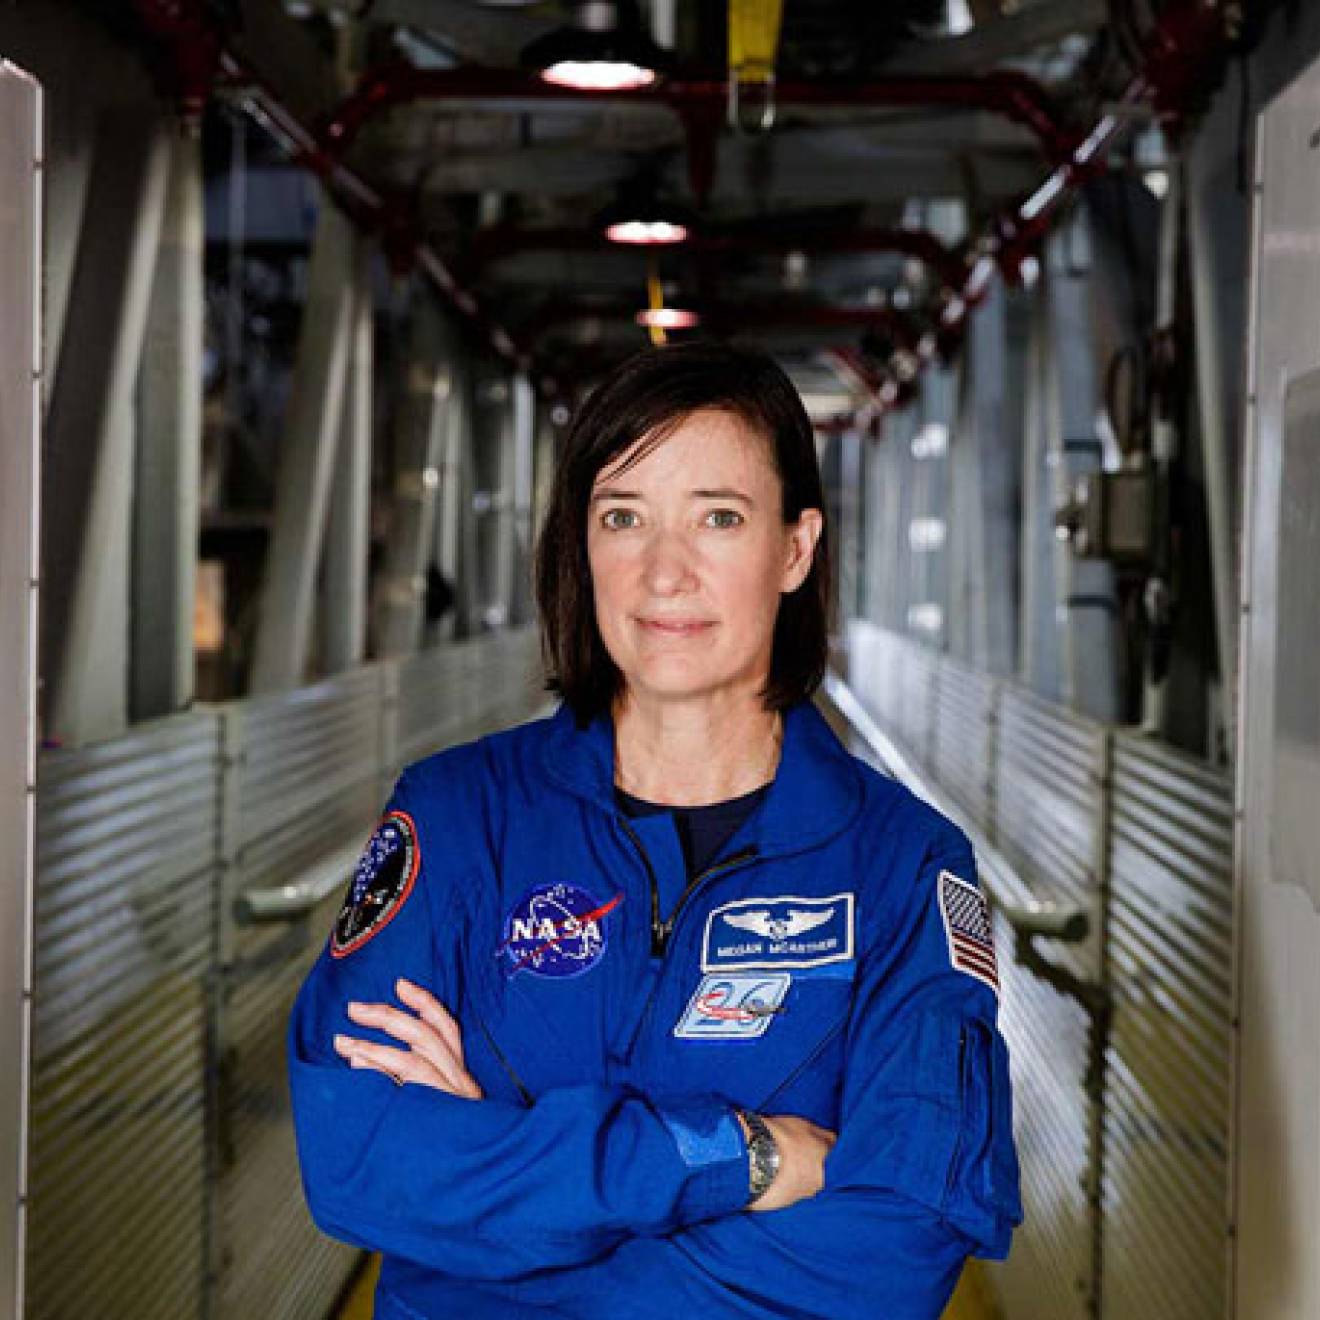 Megan McArthur portrait in NASA blues